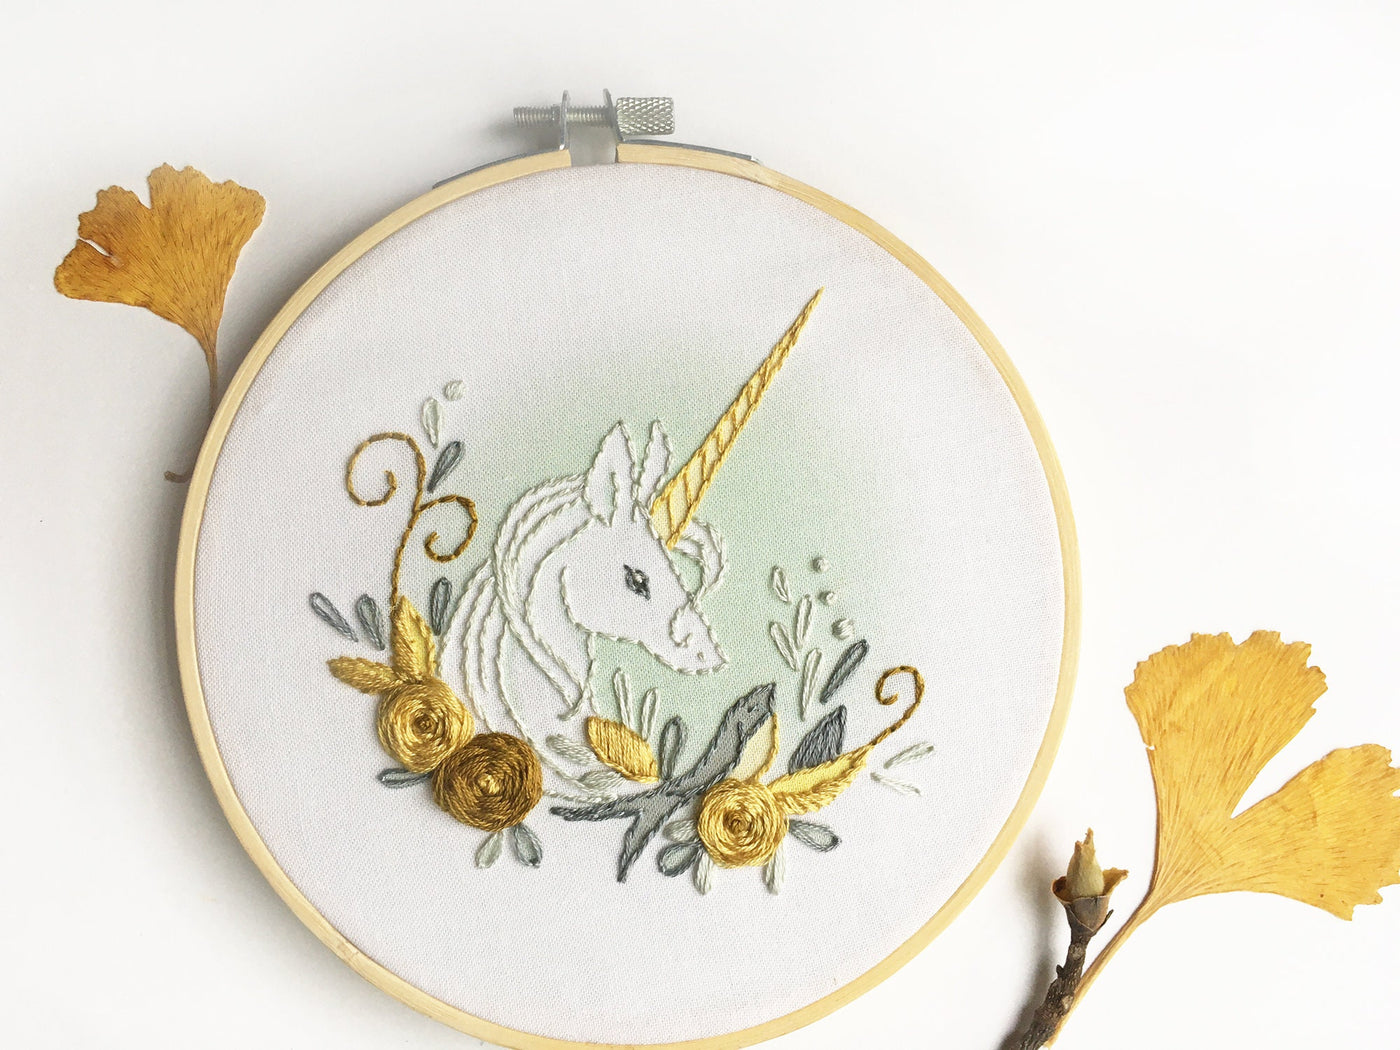 Unicorn 4-inch embroidery kit